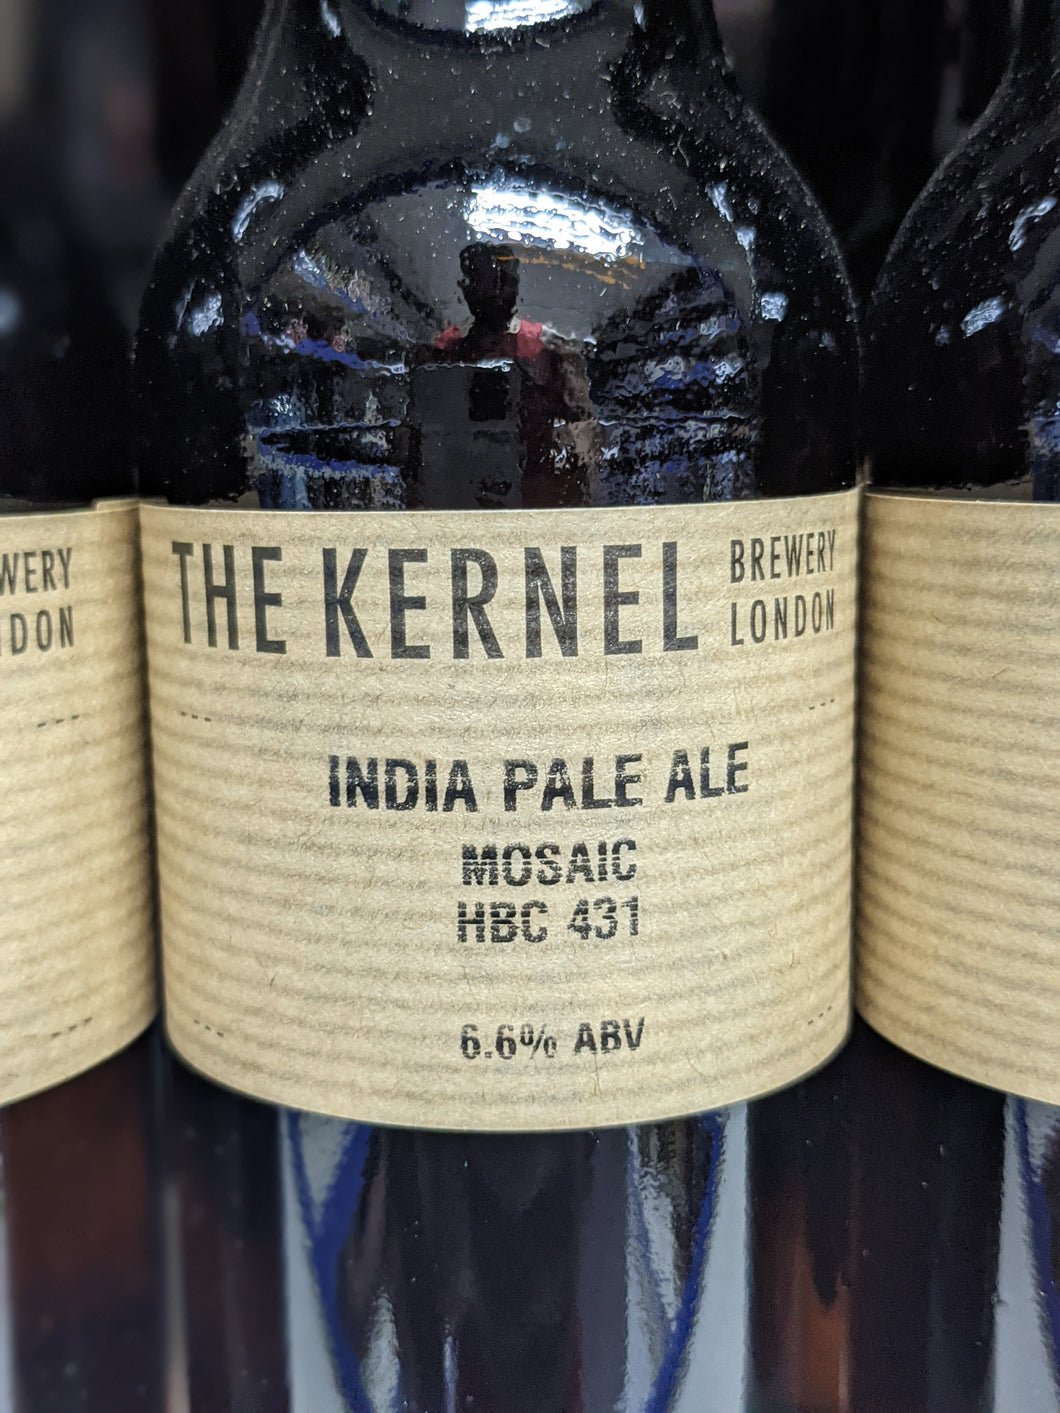 IPA Mosaic HBC431 - The Kernel Brewery - IPA, 6.6%, 330ml Bottle